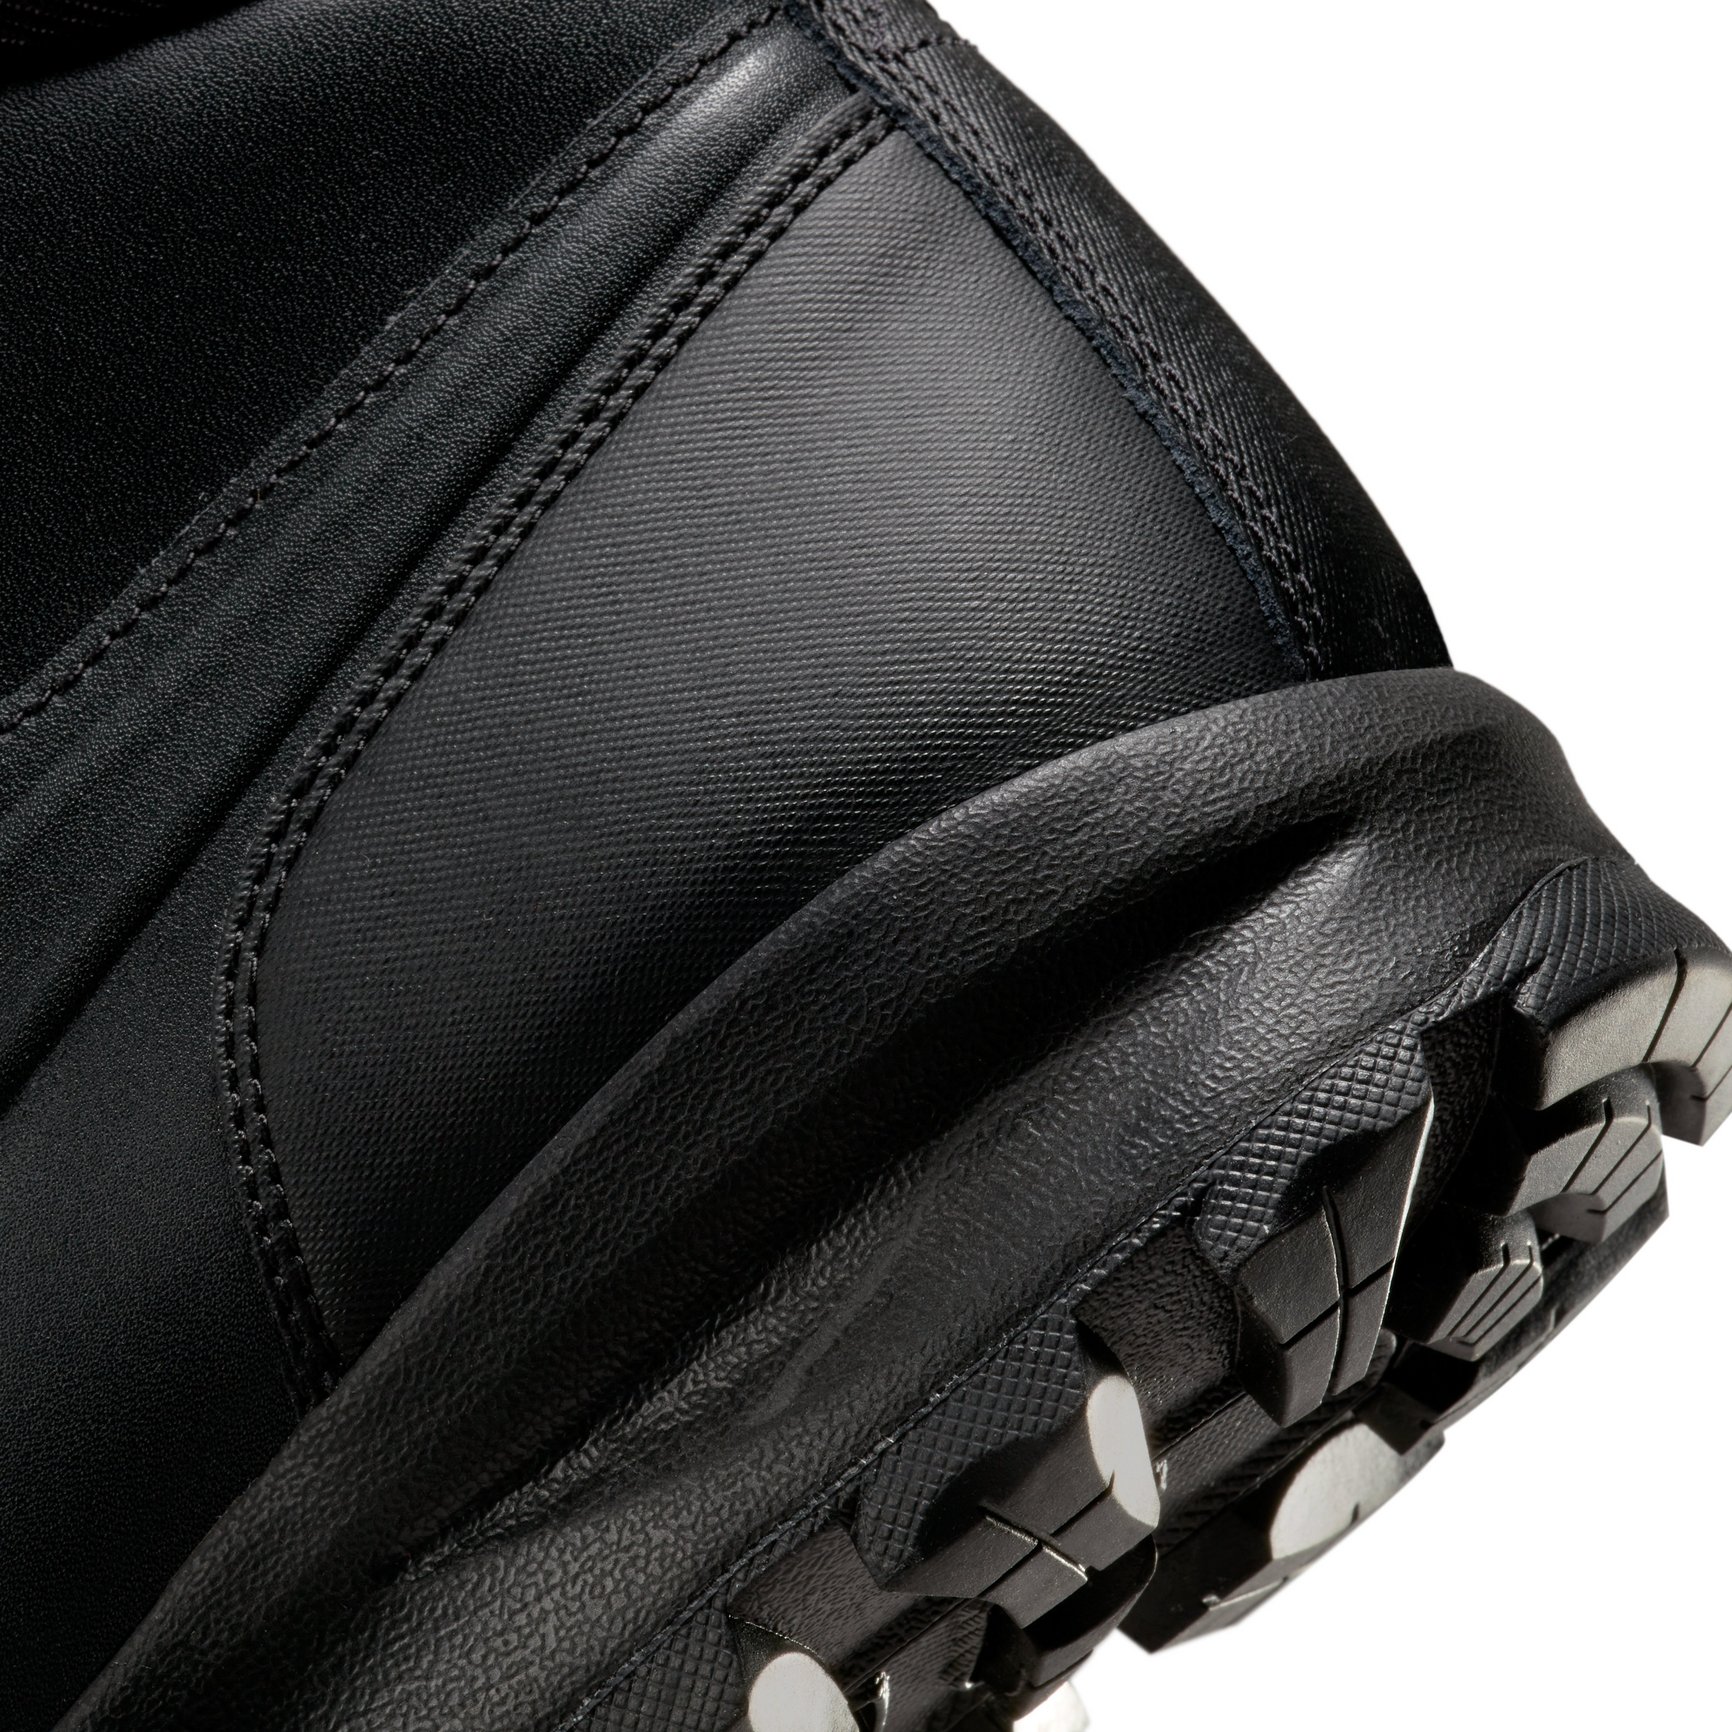 Nike Manoa Leather SE Black Gunsmoke